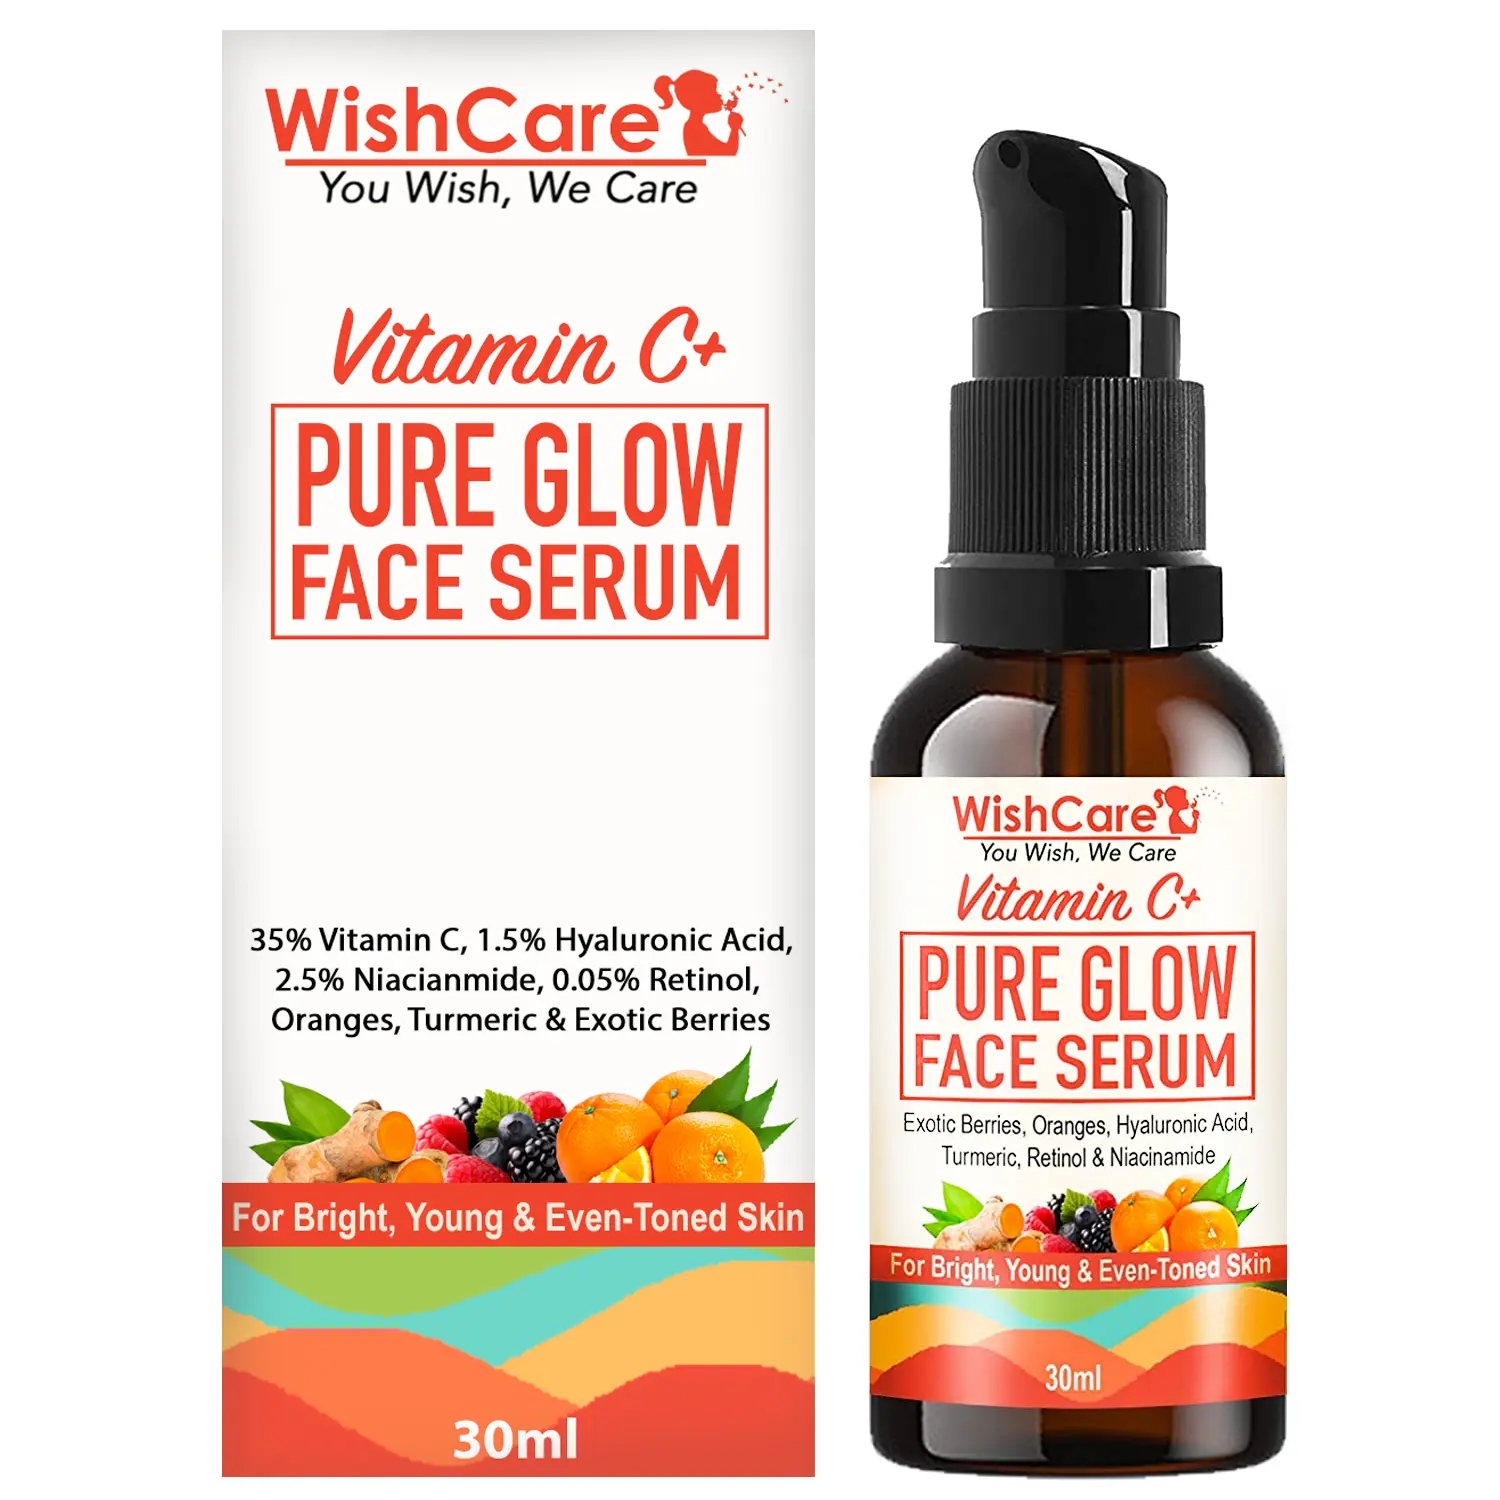 WishCare Vitamin C+ Pure Glow Face Serum (30ml)